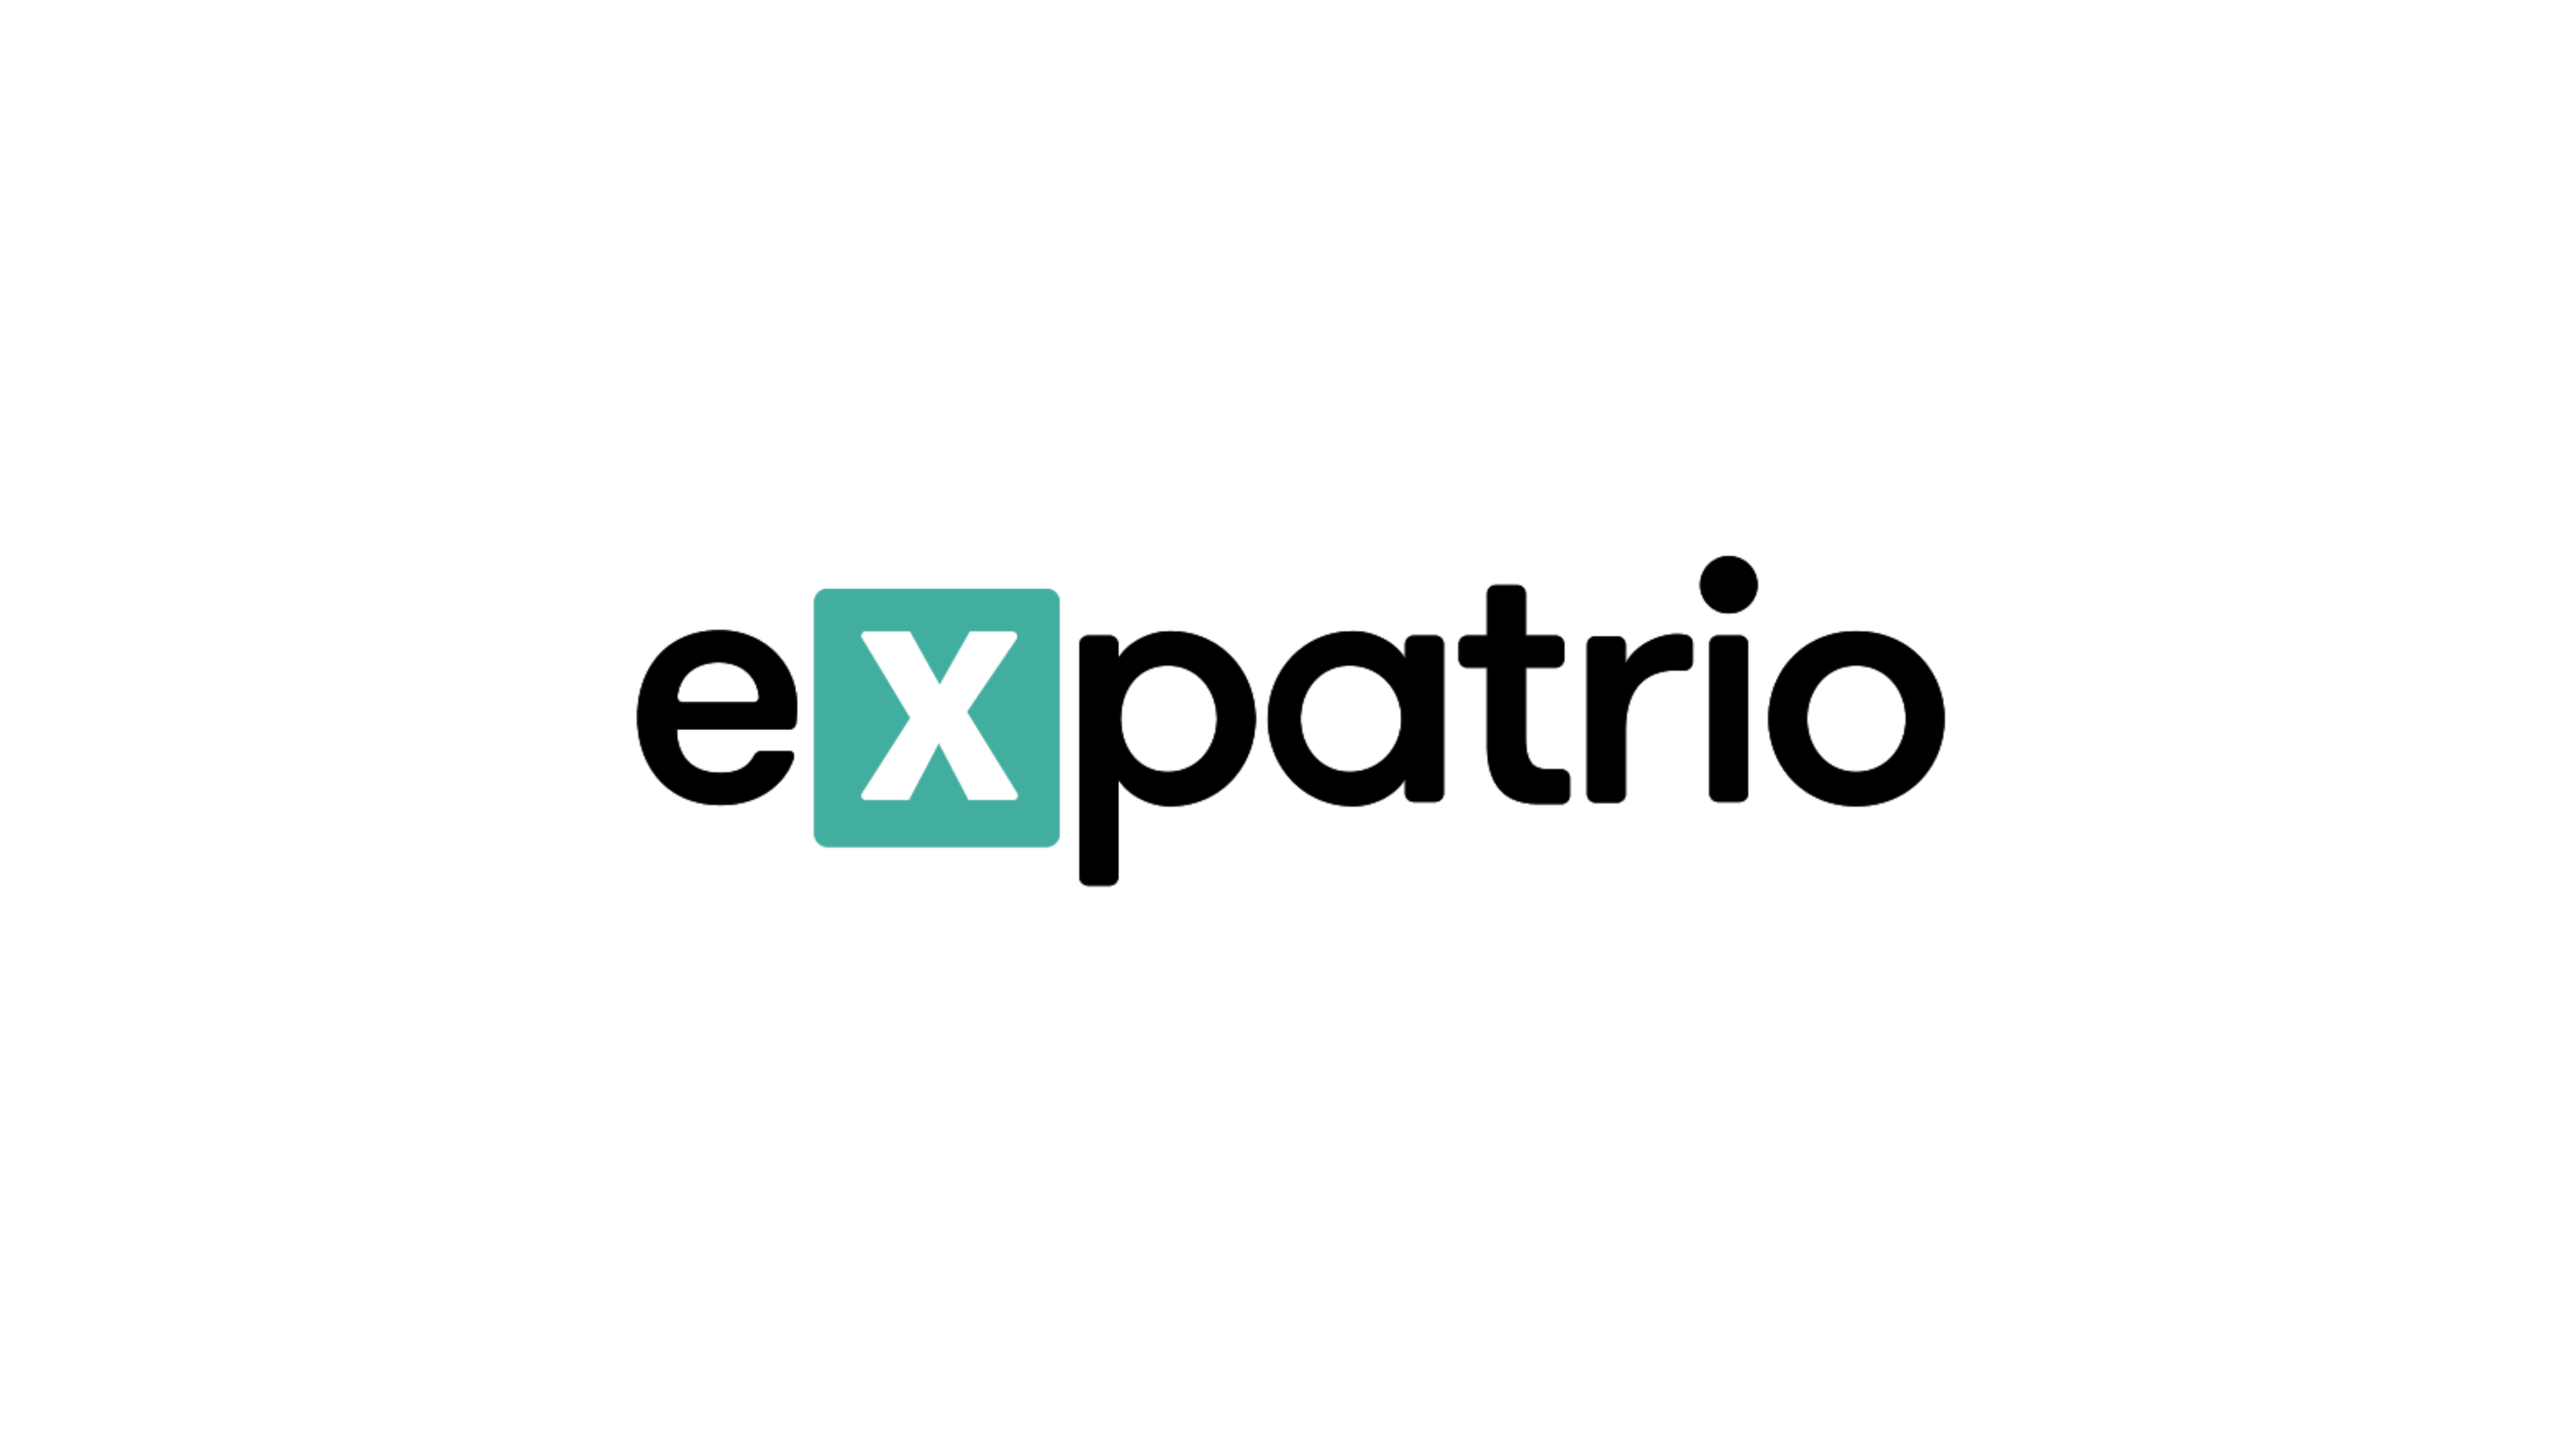 Expatrio (X-Patrio) 限制提領帳戶 開戶申請教學 2020 台灣獨家官方授權機構